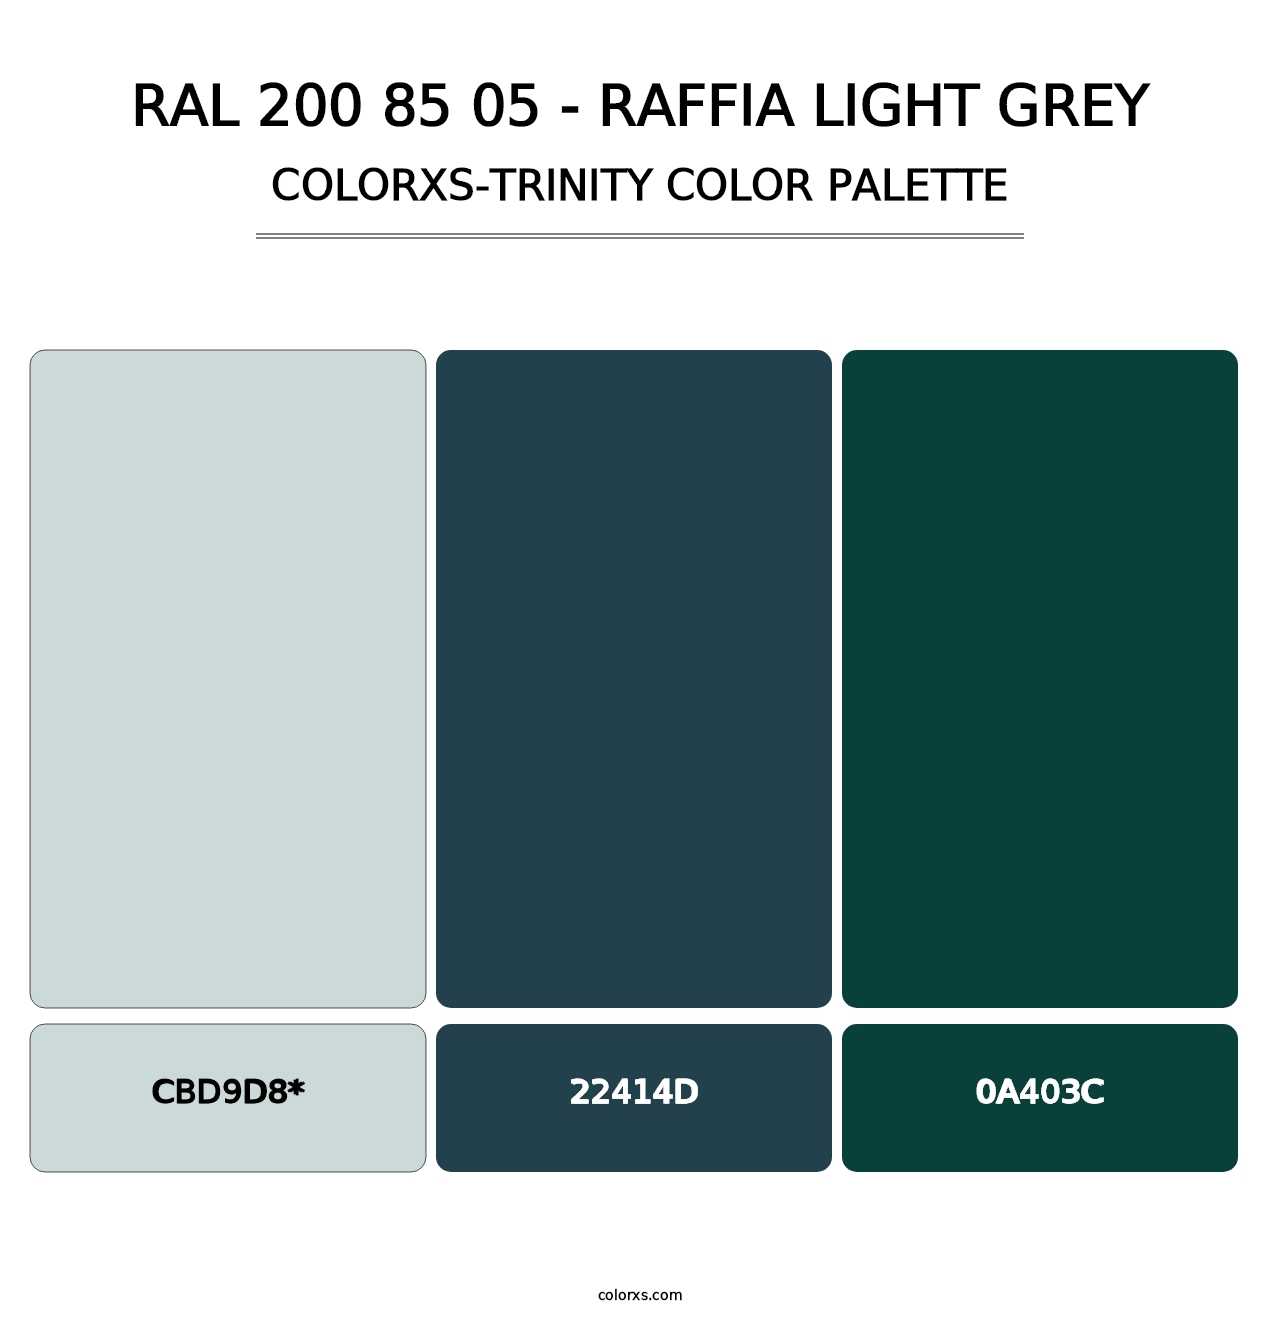 RAL 200 85 05 - Raffia Light Grey - Colorxs Trinity Palette